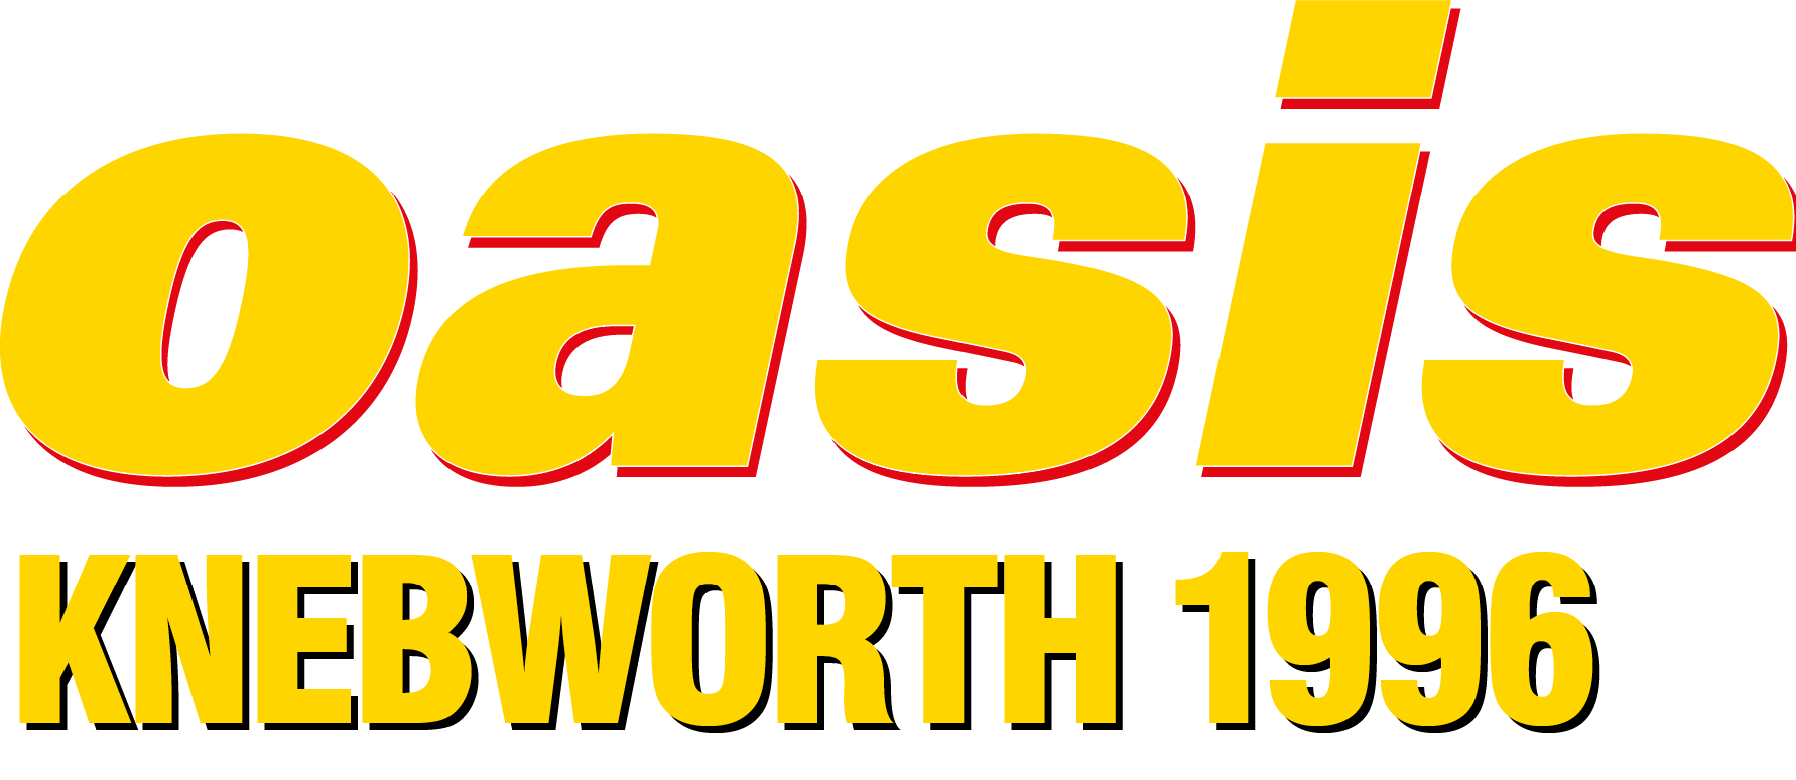 El logo de Oasis: Knebworth 1996